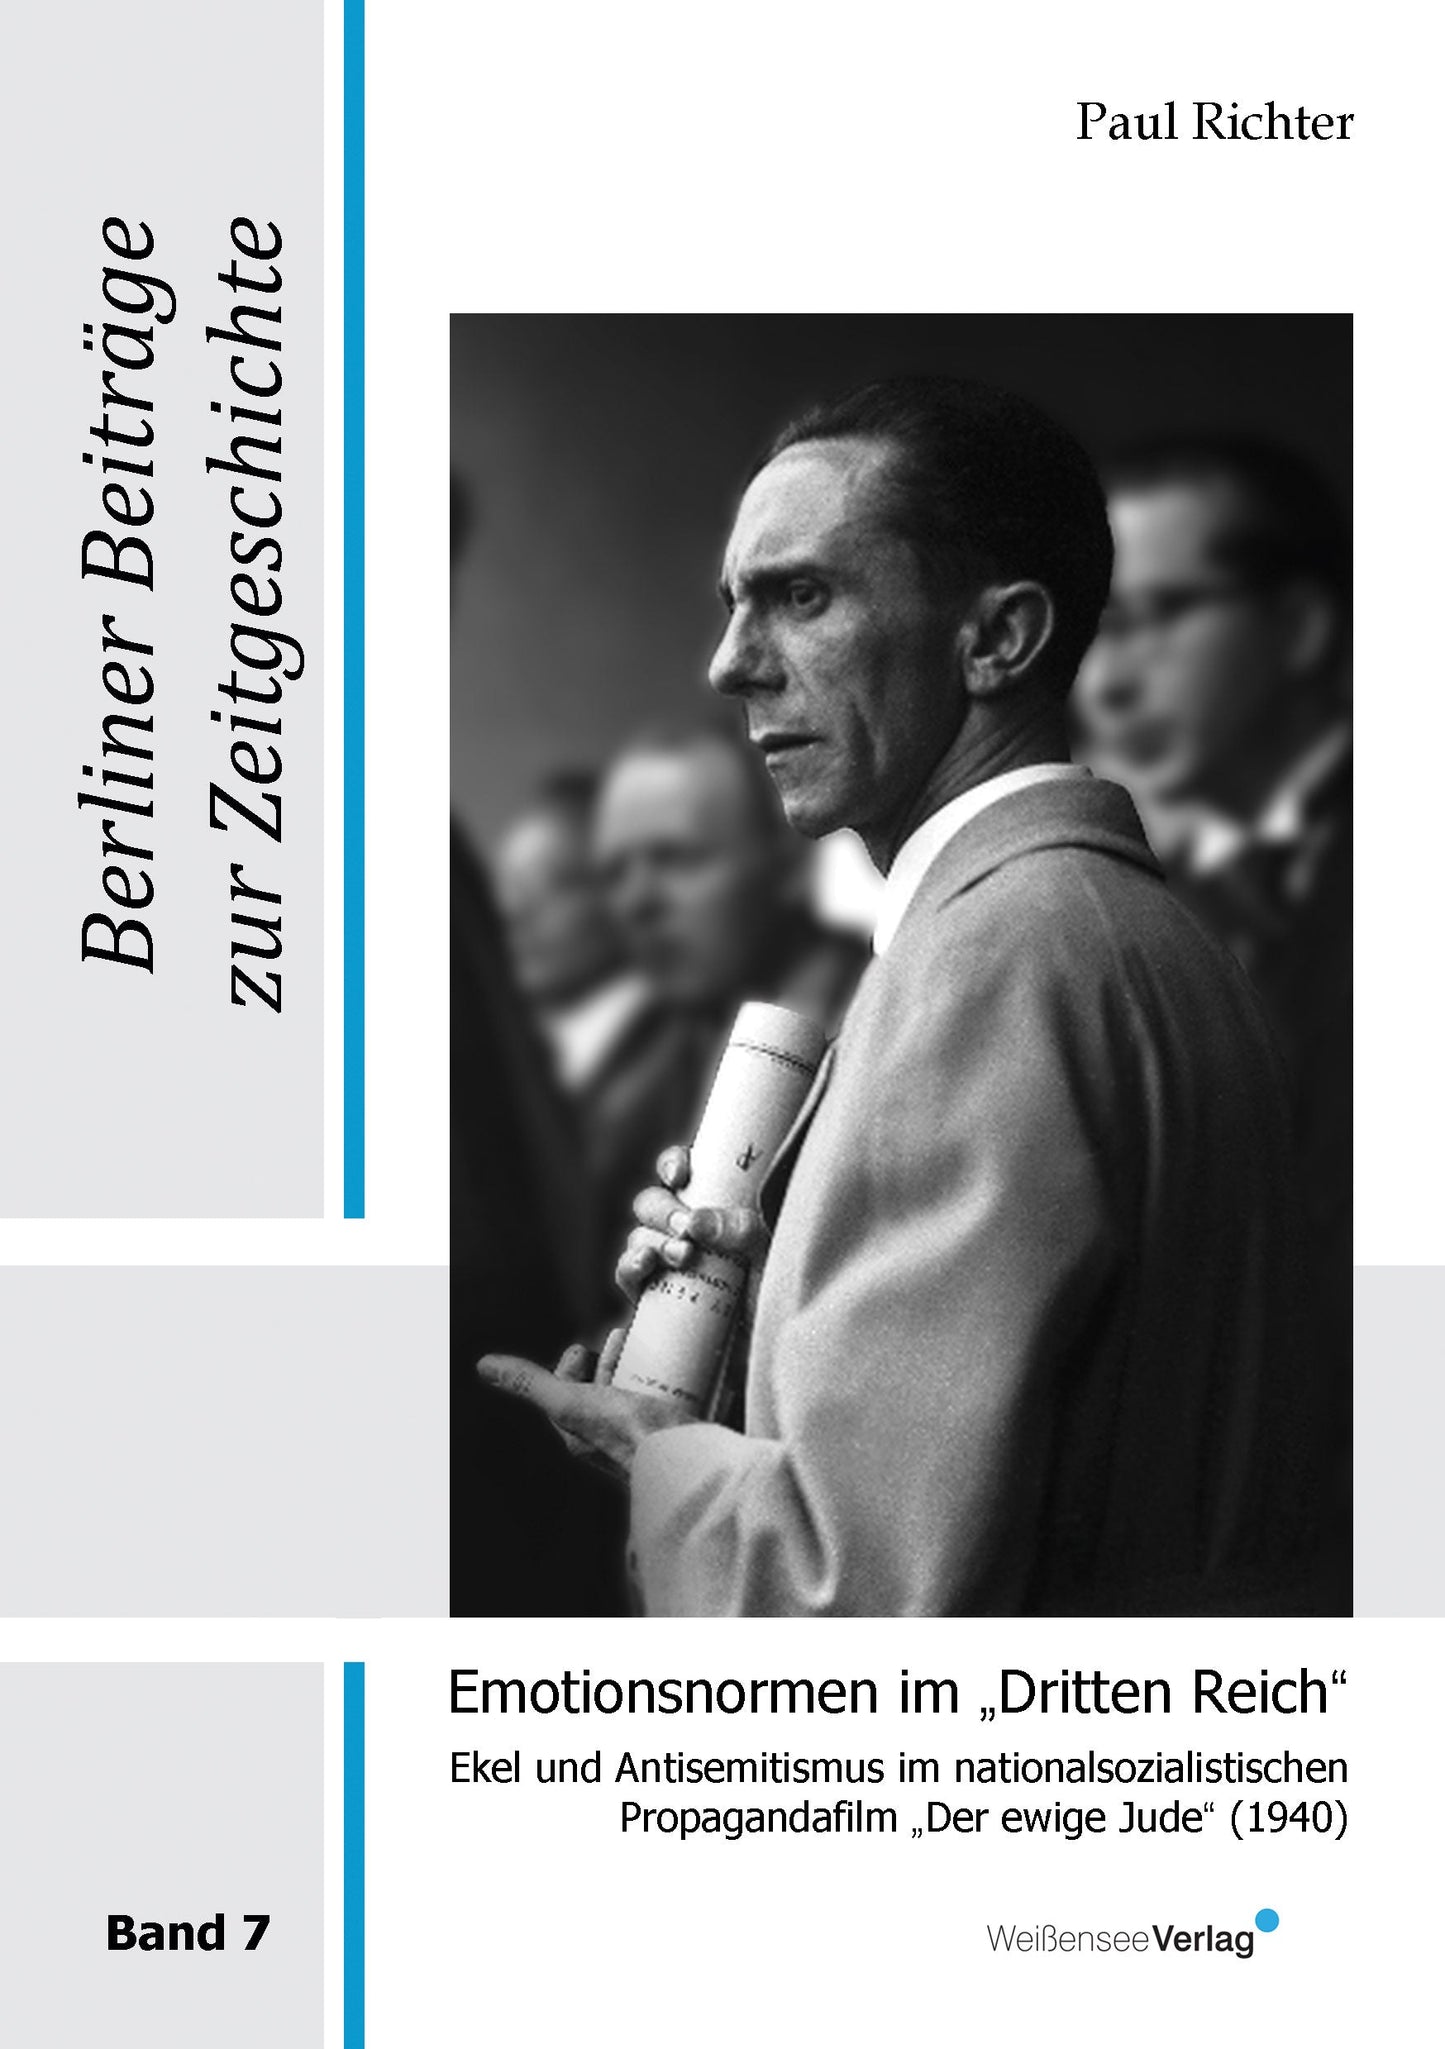 Paul Richter: Emotionsnormen im „Dritten Reich“